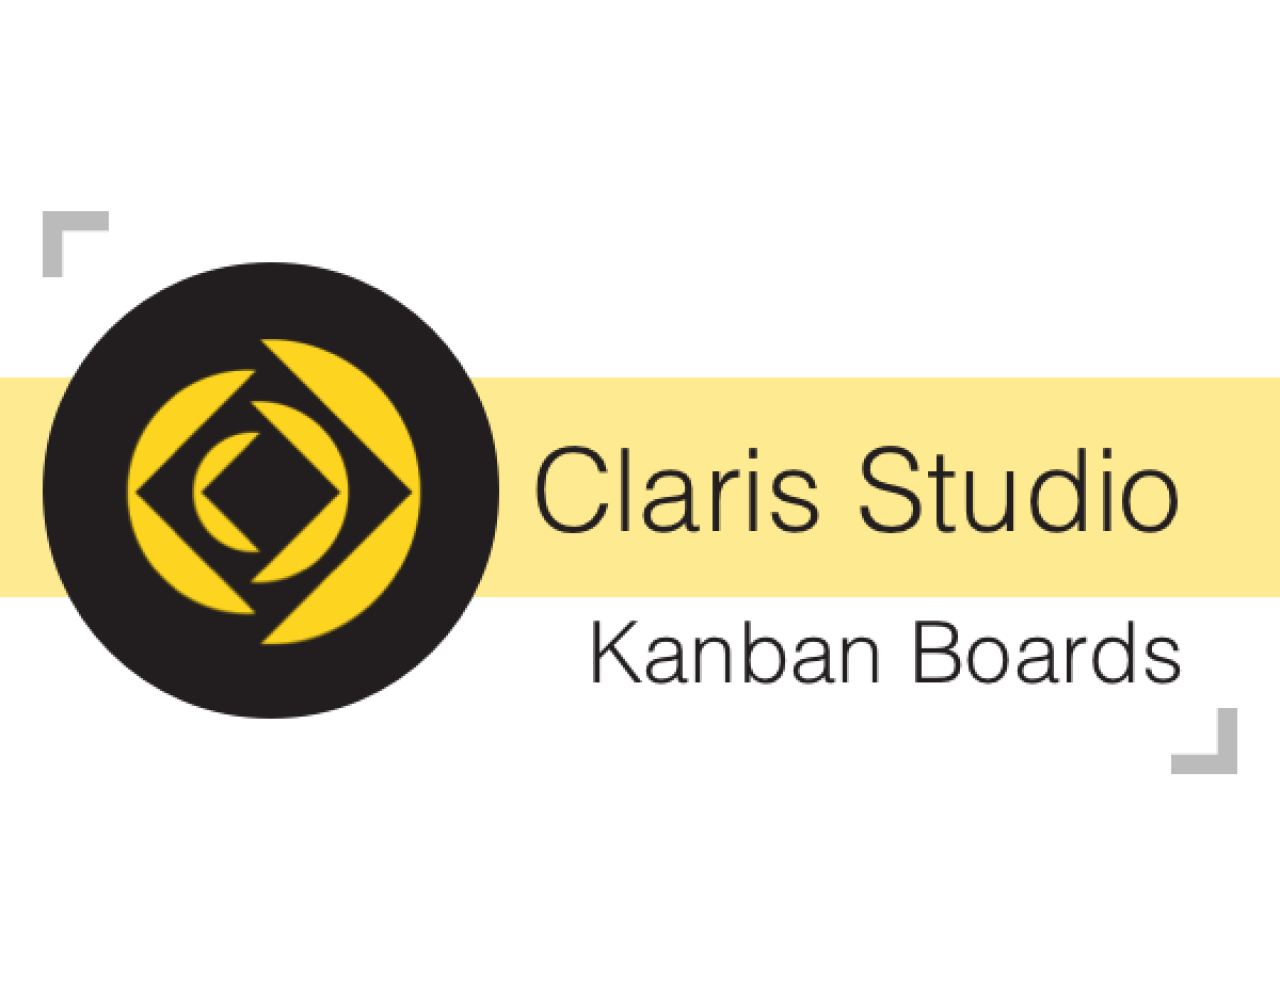 claris studio kanban boards.